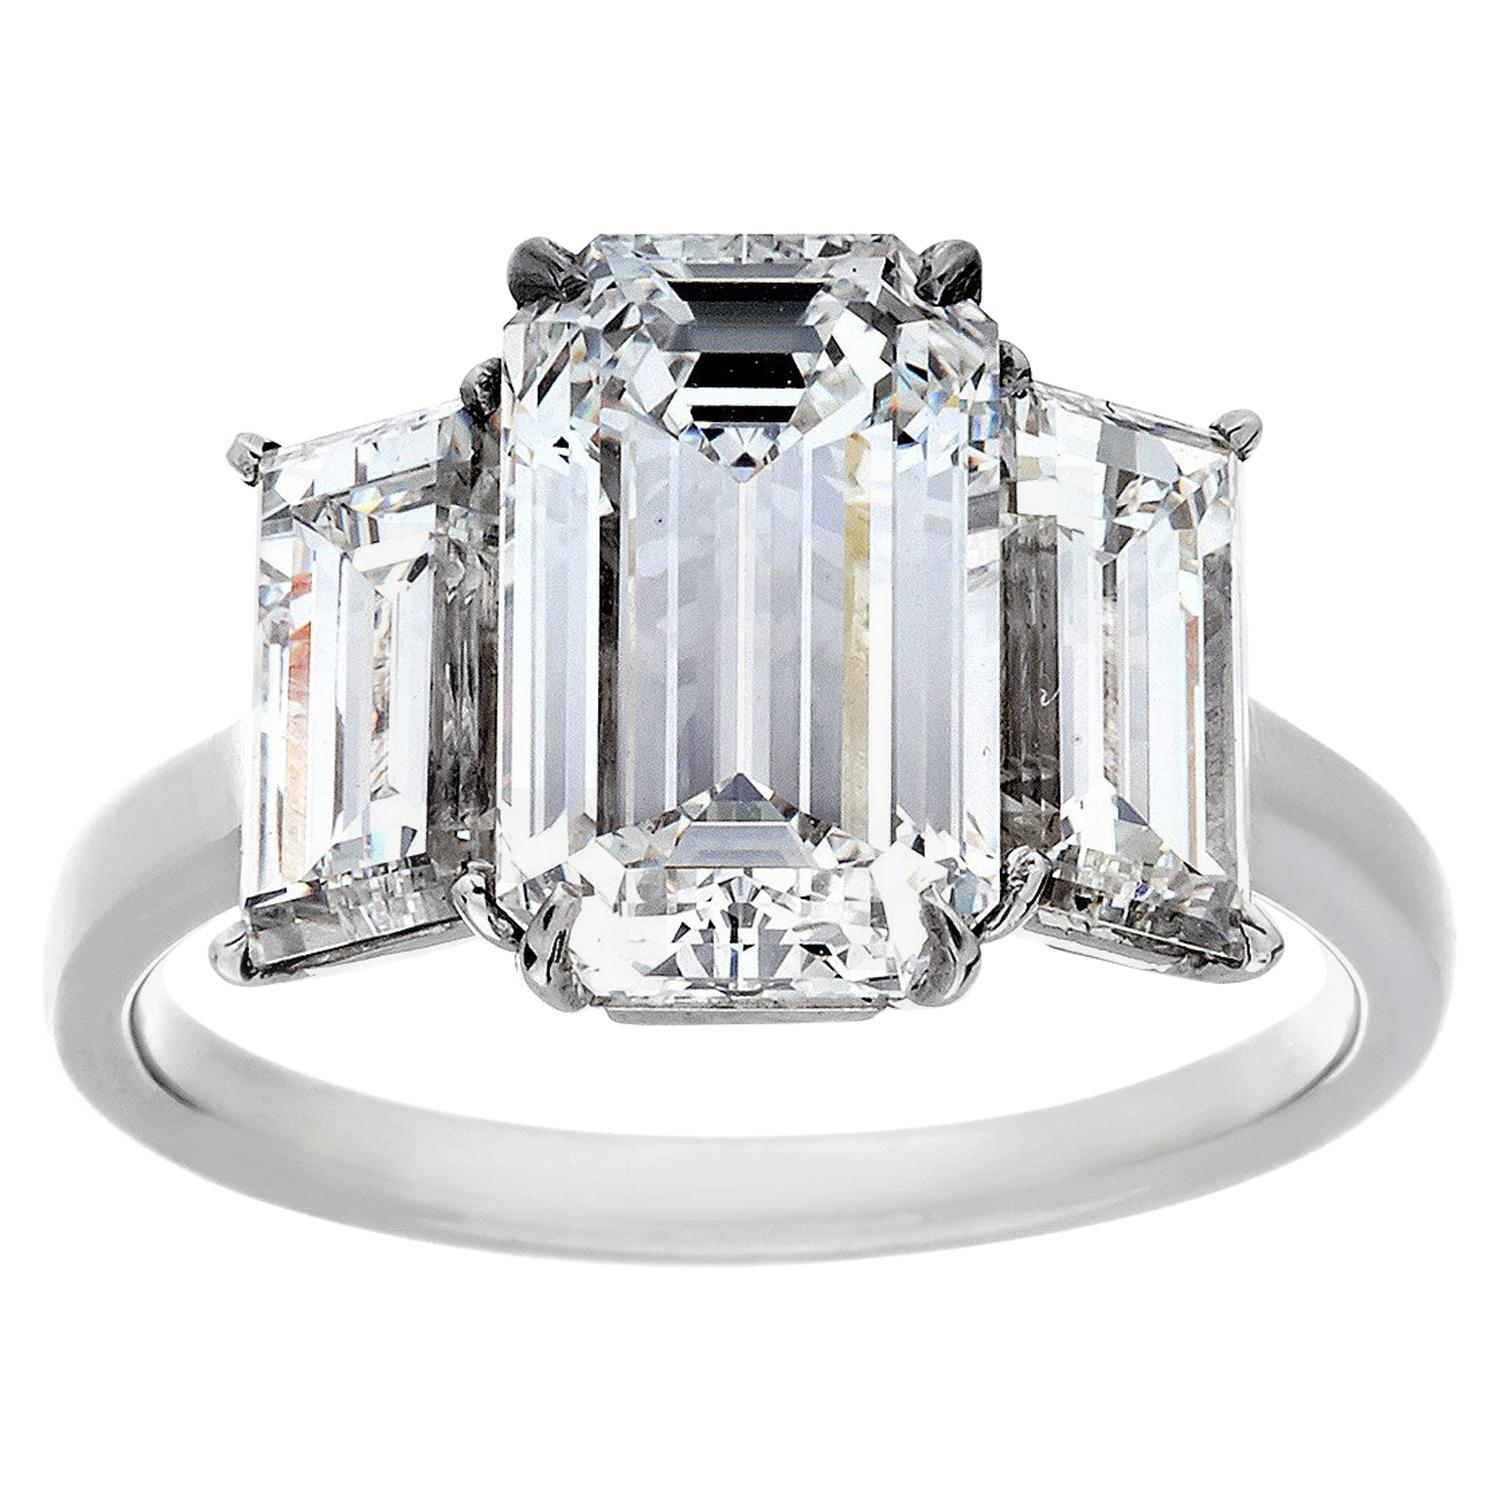 5.13 Carat Total Weight 3-Stone Emerald Cut Diamond Ring